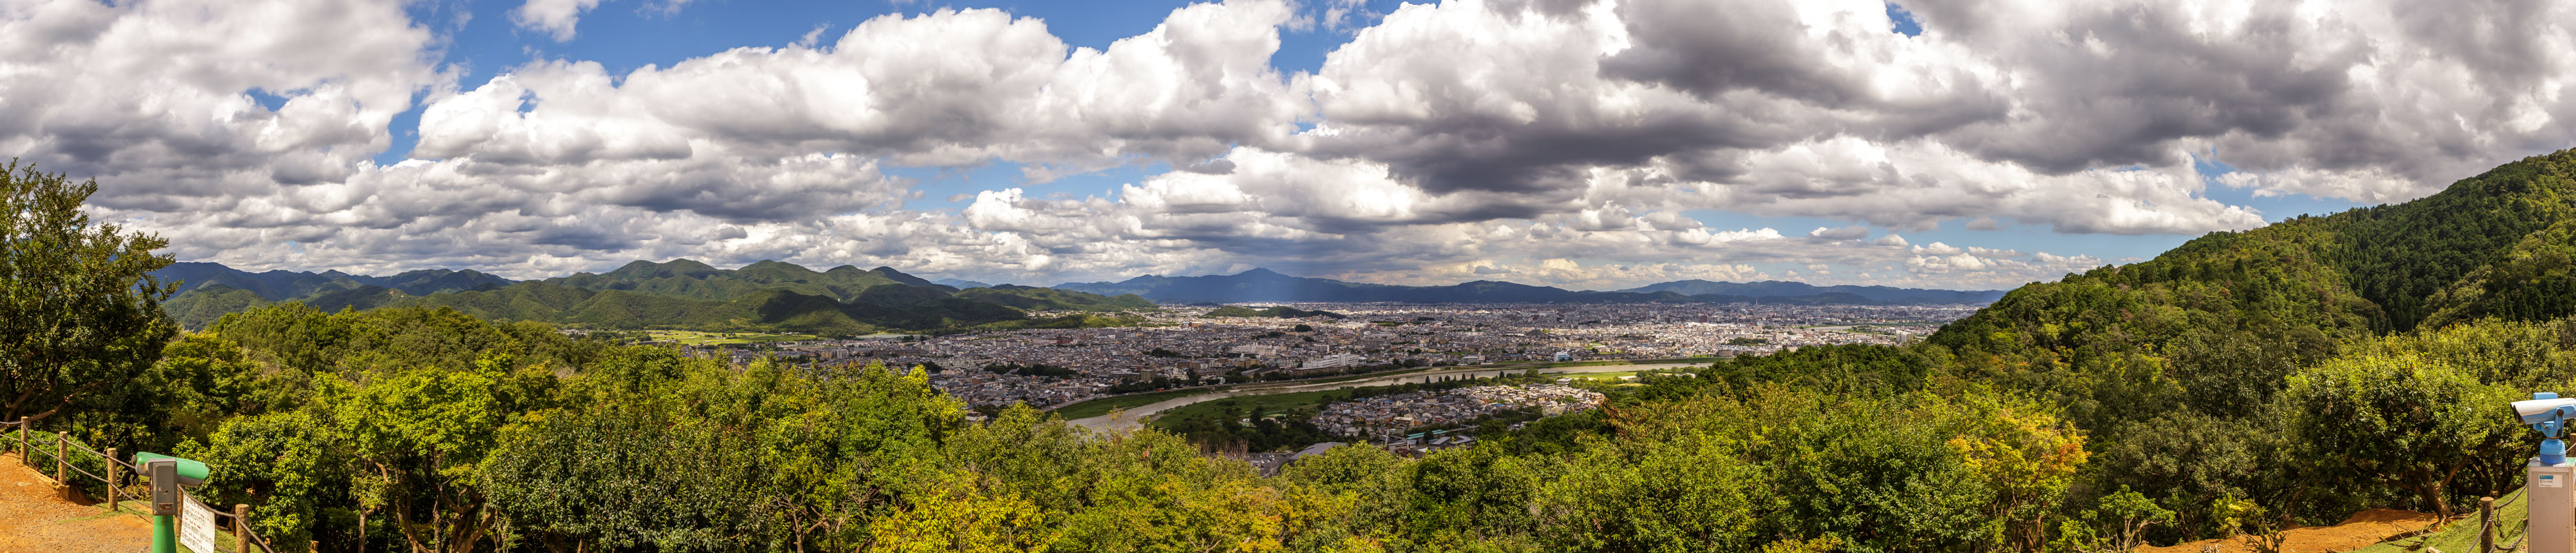 /Guewen/galeries/public/Voyages/Japon/kyoto/vista/Kyoto-vista_011.jpg